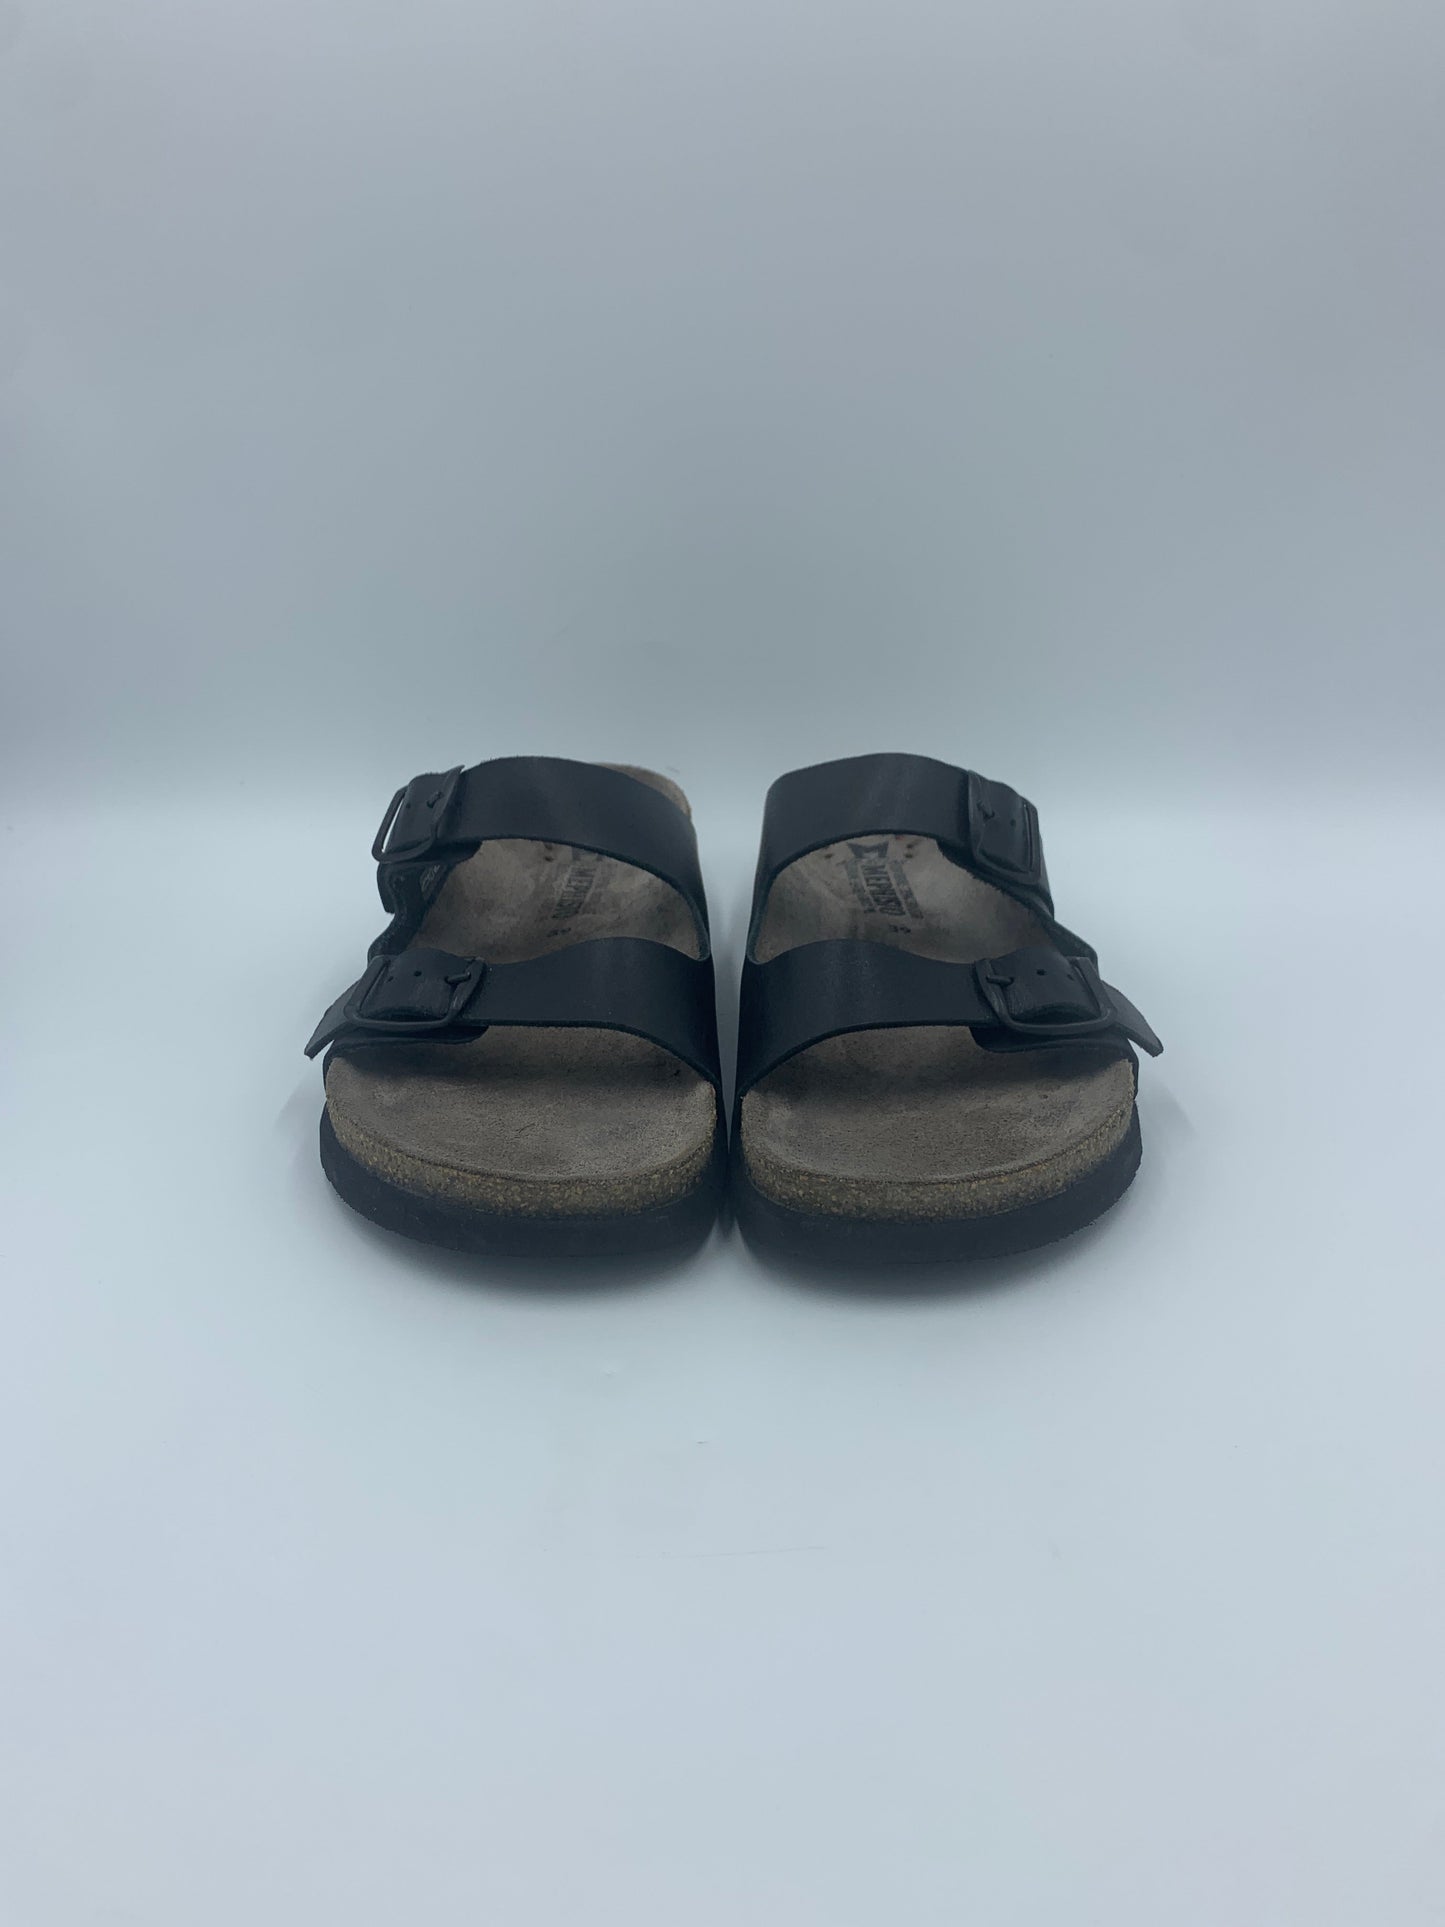 Black Sandals Designer Mephisto, Size 9